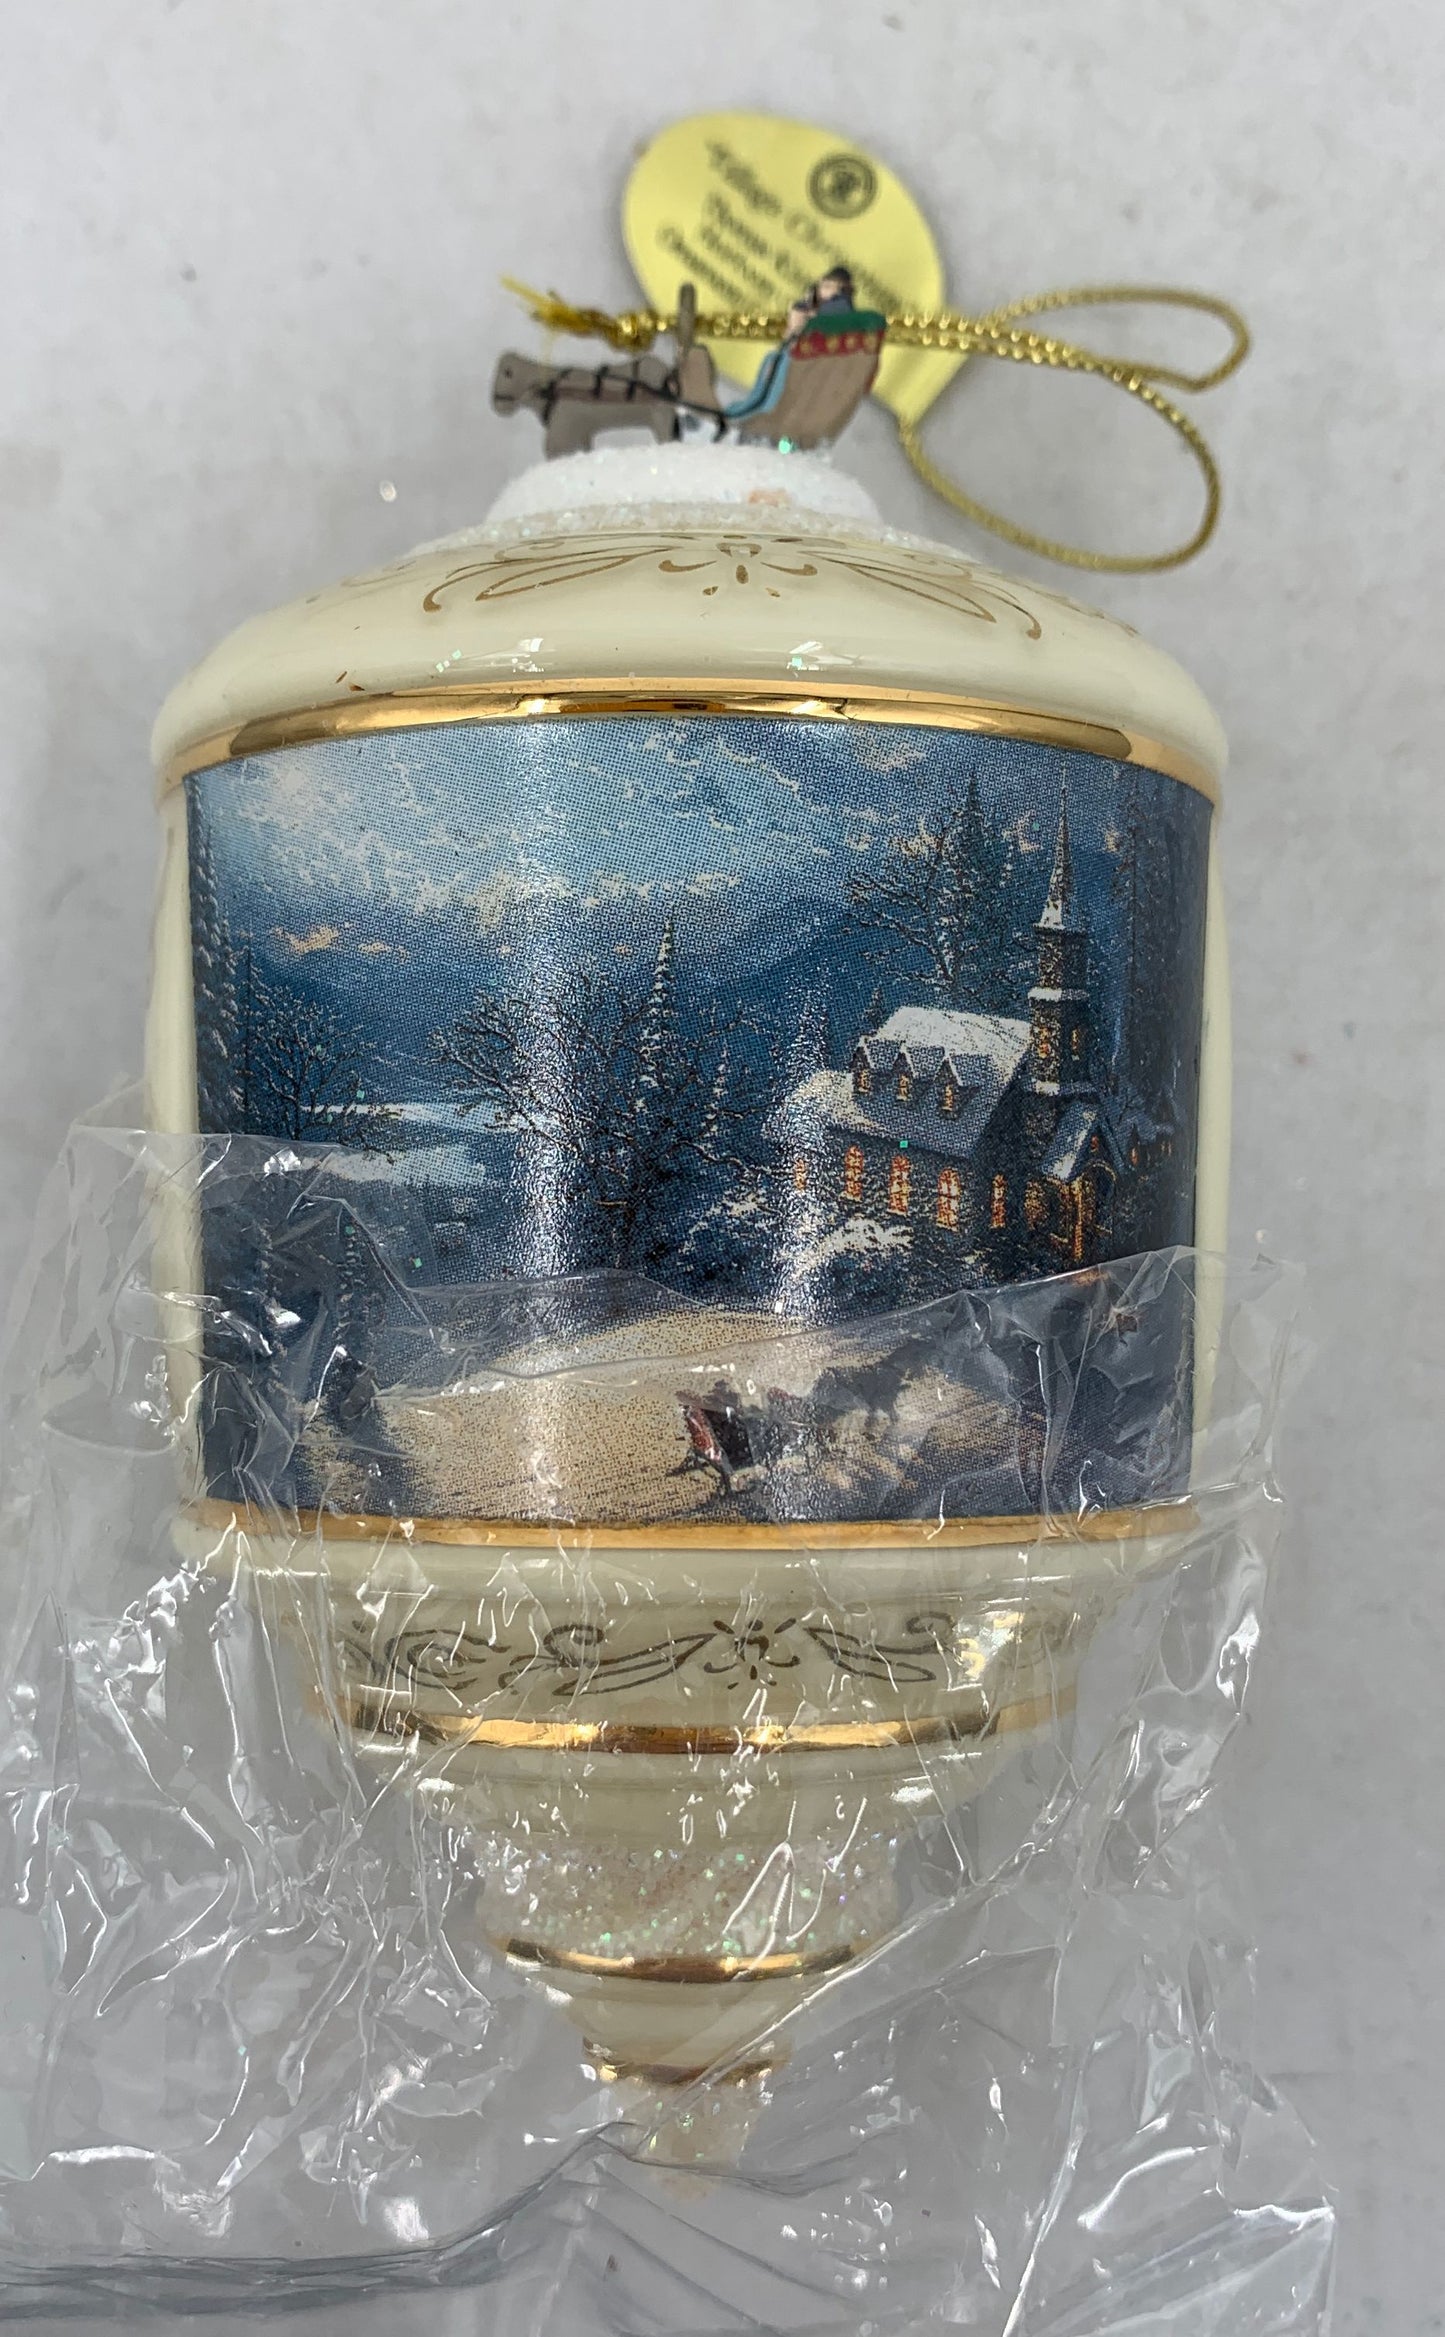 The Bradford Editions Thomas Kinkade Heirloom Glass Ornament Set #68417 2001